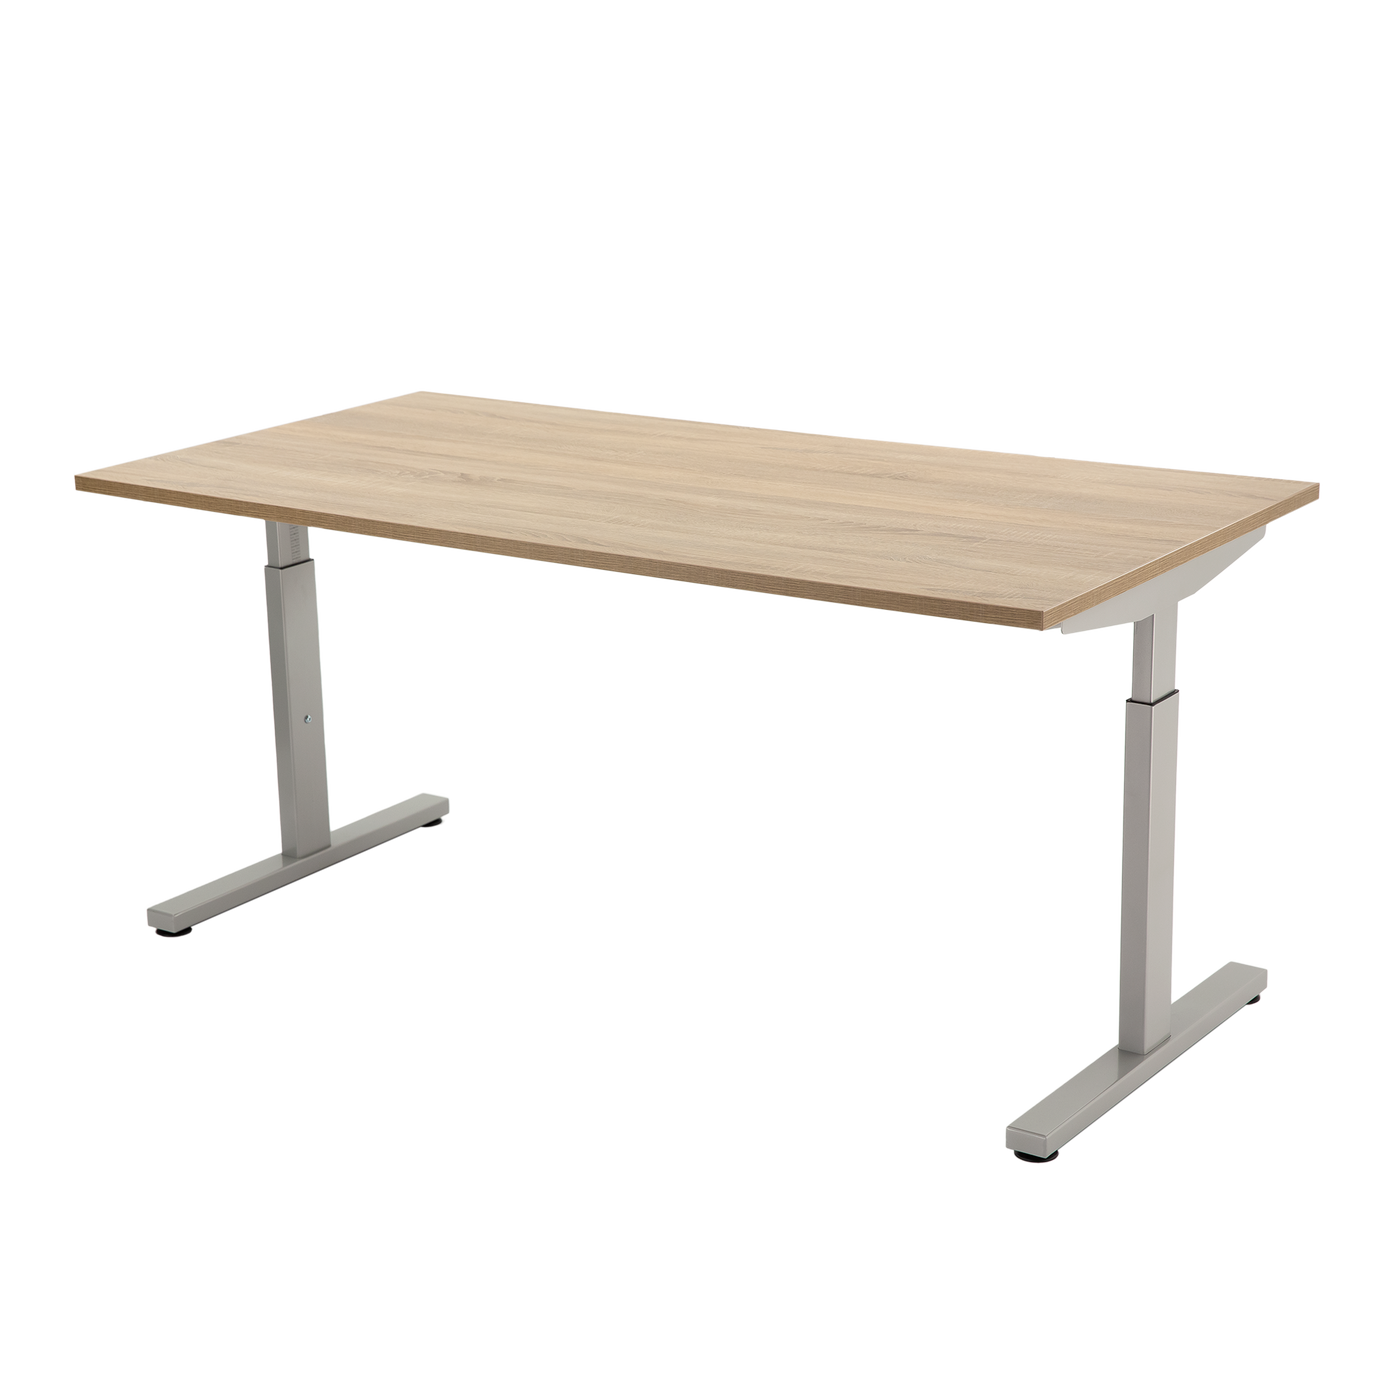 Pinta Adjustable desk